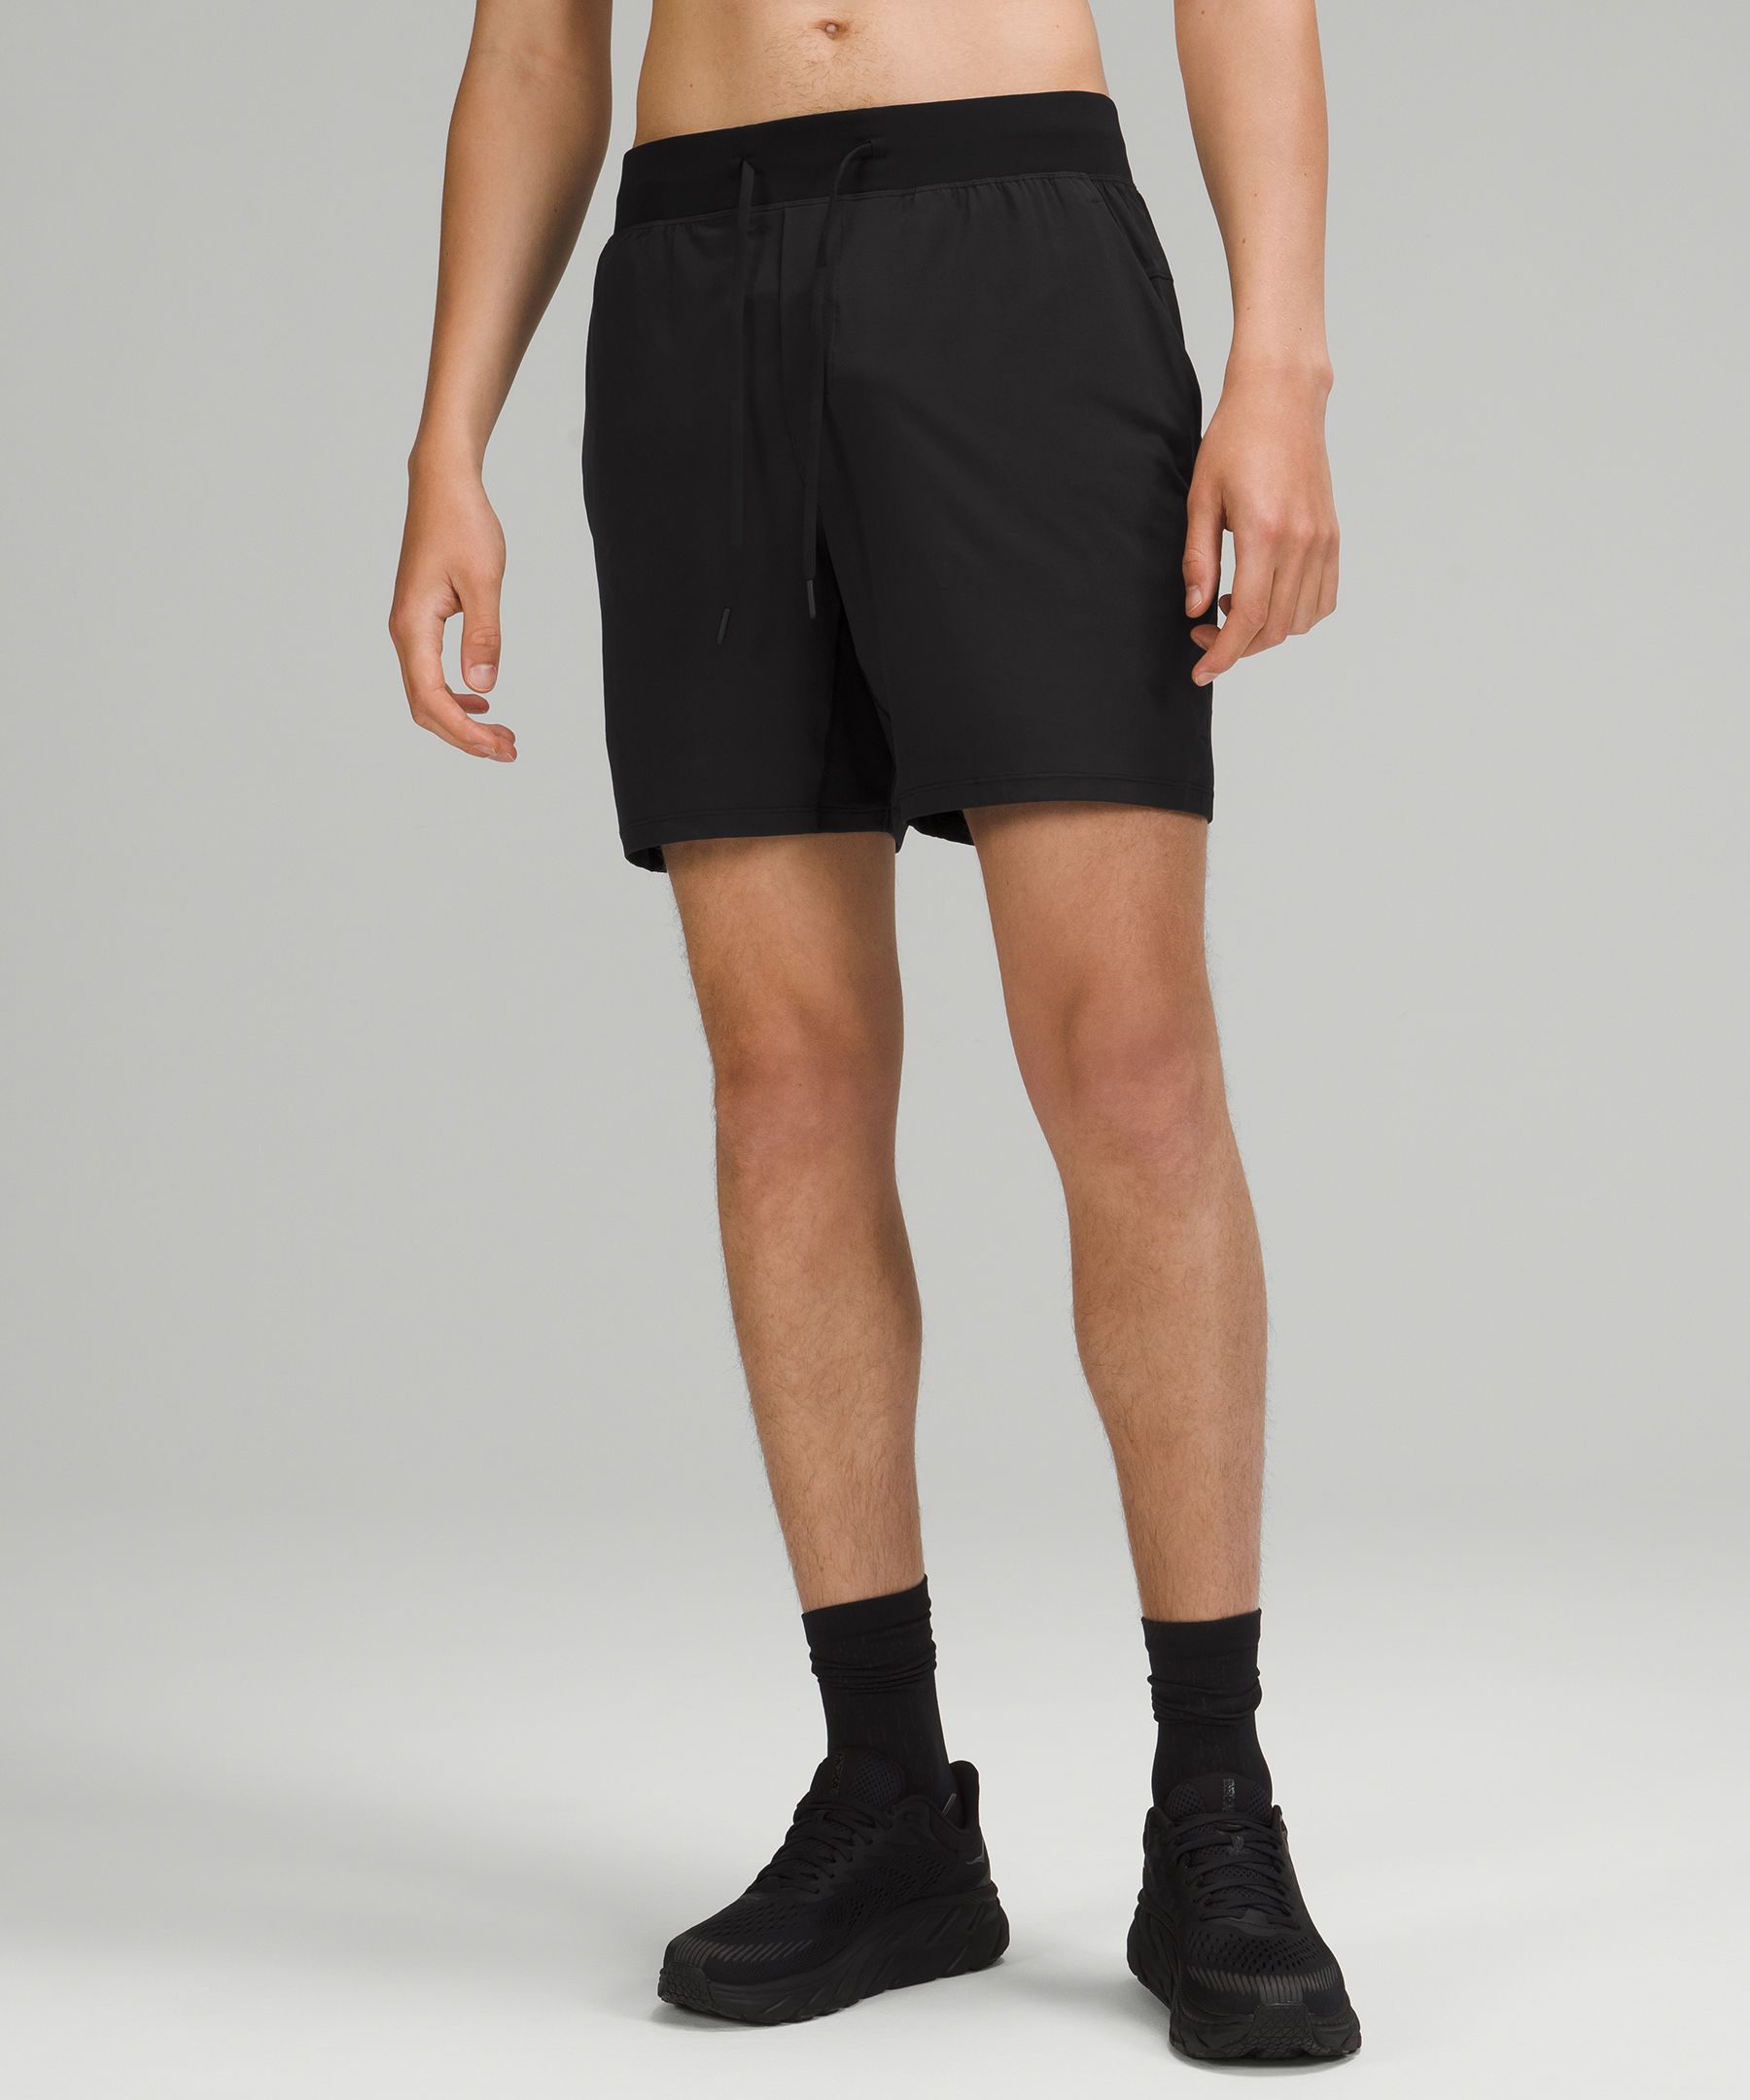 mens running shorts lululemon